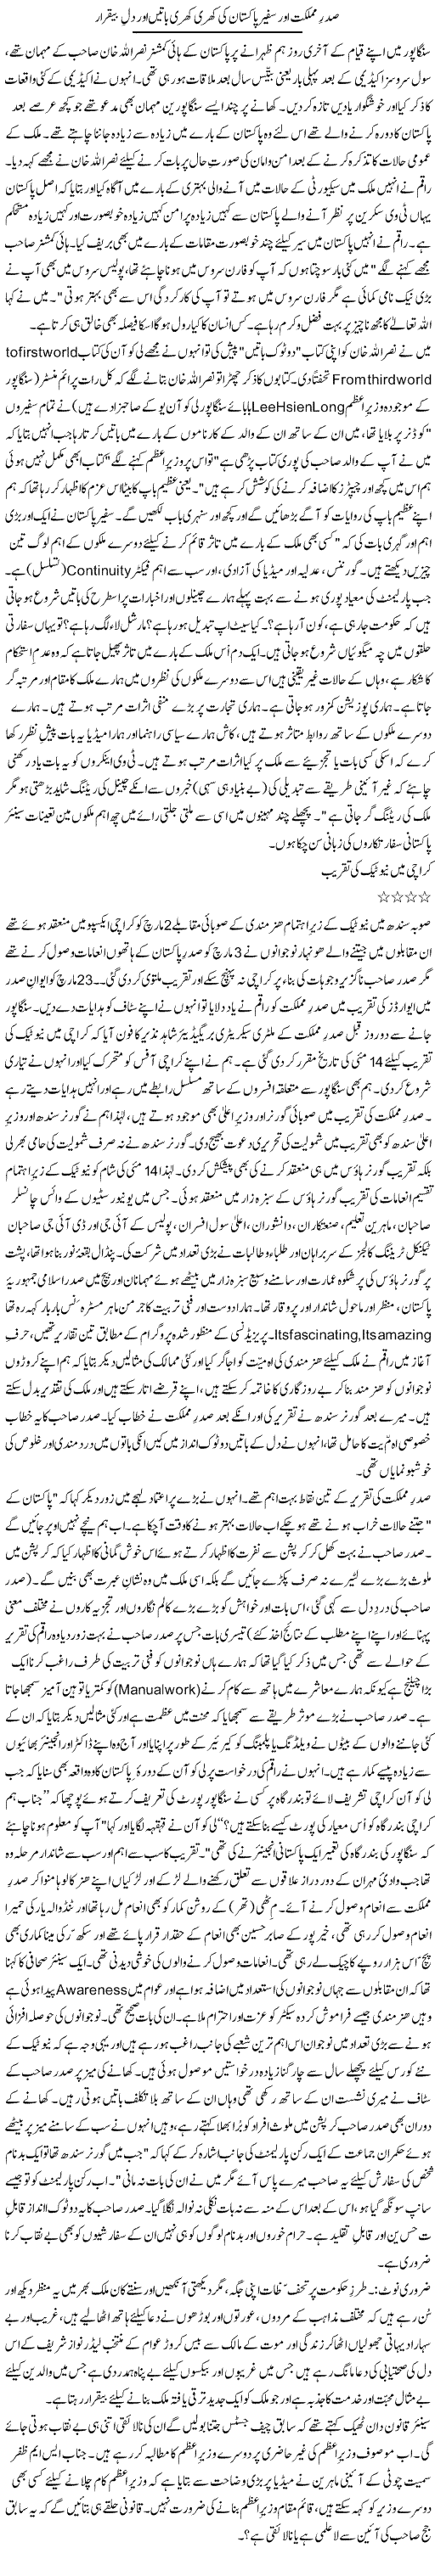 Sadar Mumlikat Aor Safeer Pakistan Ki Khari Khari Baatein Aur Dil e Bekraar | Zulfiqar Ahmed Cheema | Daily Urdu Columns